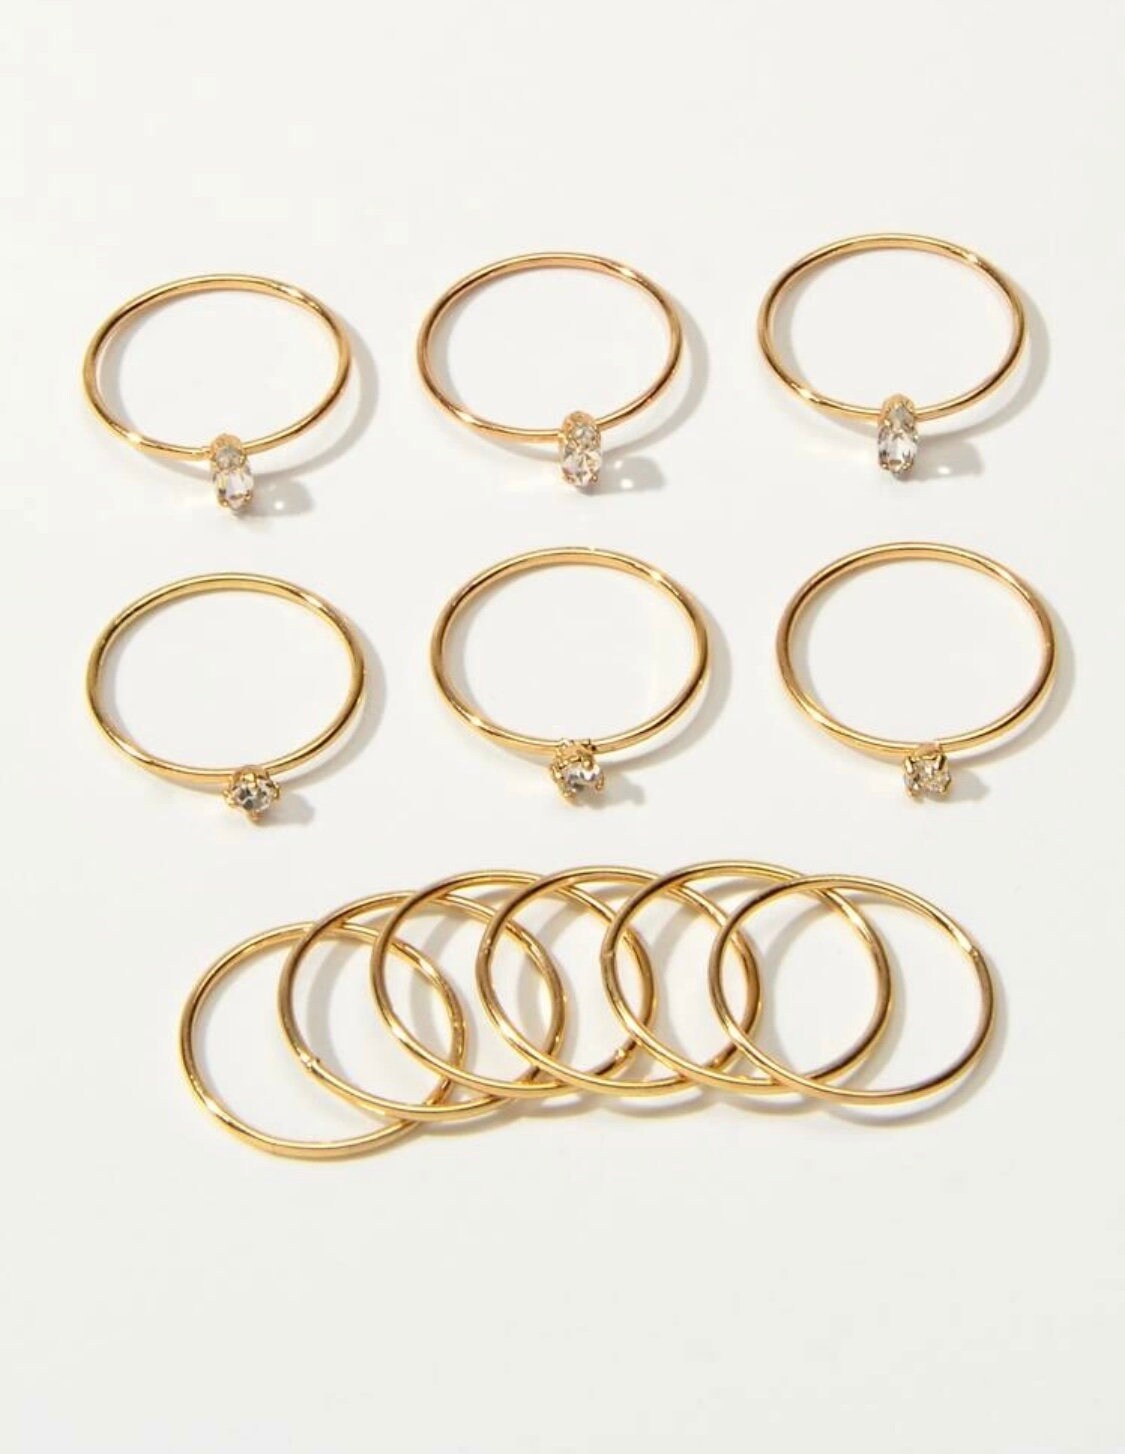 12 Piece Simple Gold & Rhinestone Stacking Ring Set, Gold Stacking Rings, Classic Gold Ring Set, Simple Rhinestone Rings, Gold Ring Bands